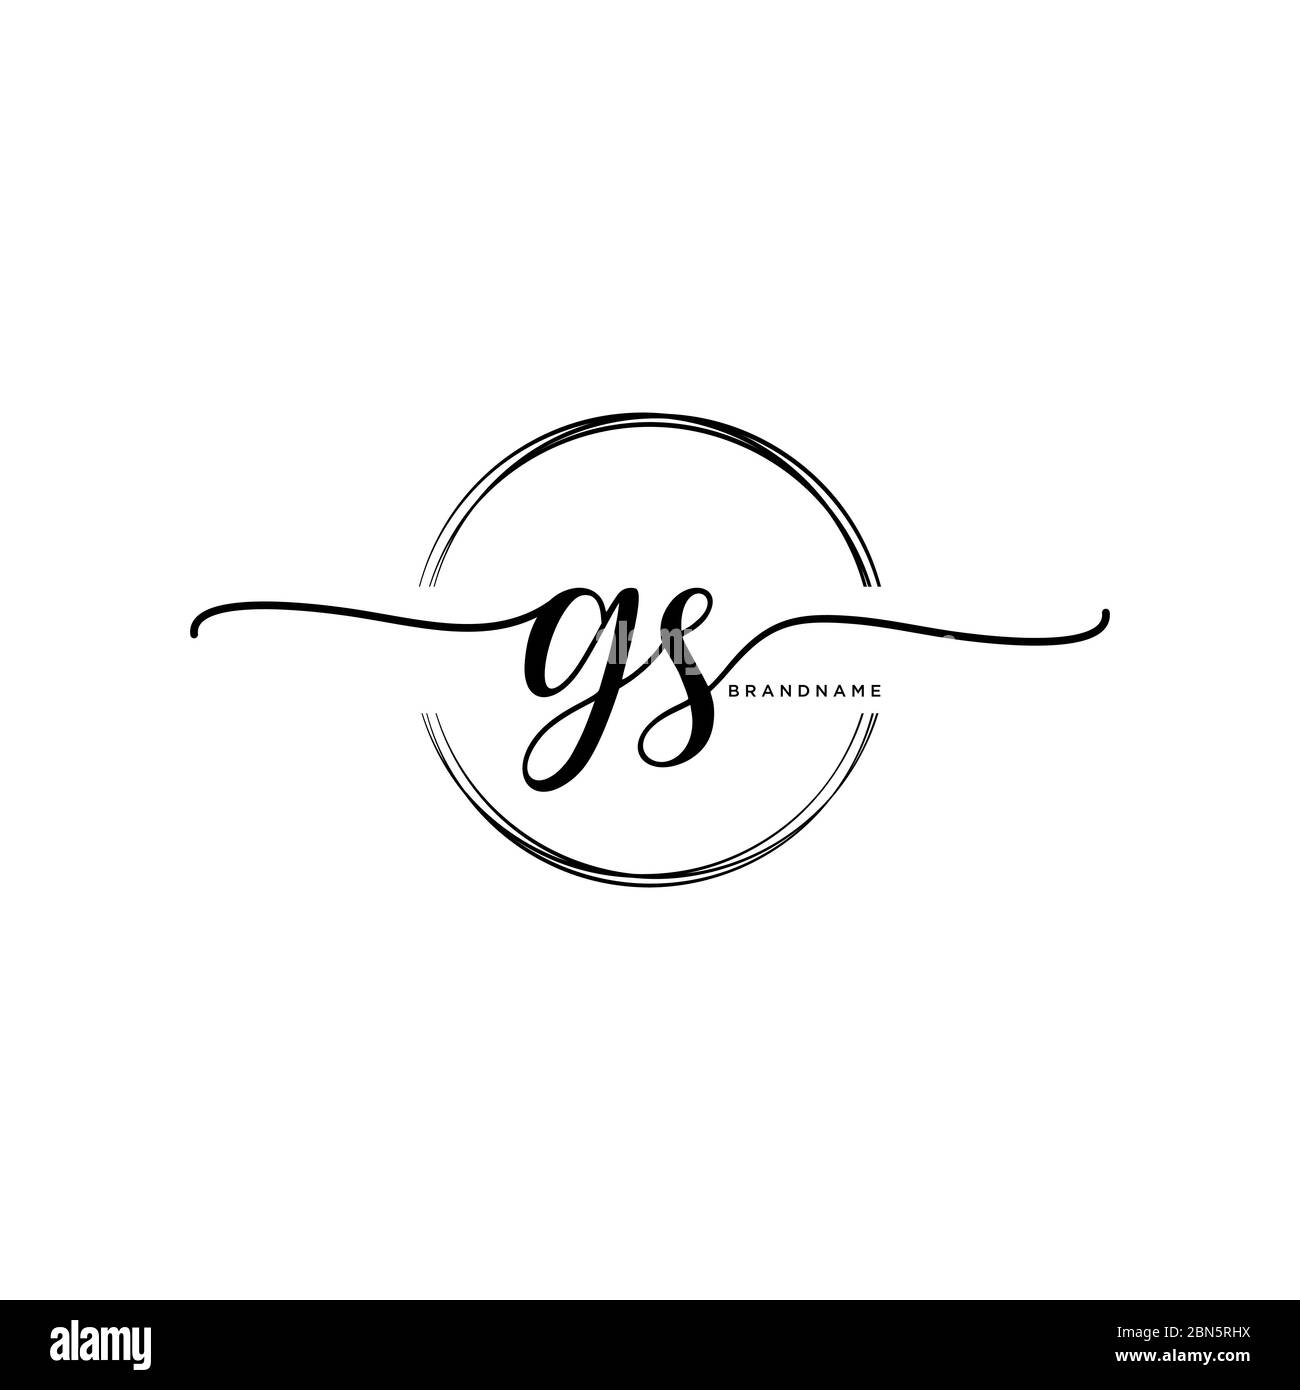 GS Brush Letter Logo Design. Artistic Handwritten Brush Letters Logo  Concept Vector. Download a Free Preview or High Q… | Gs logo, Logo design,  Initials logo design